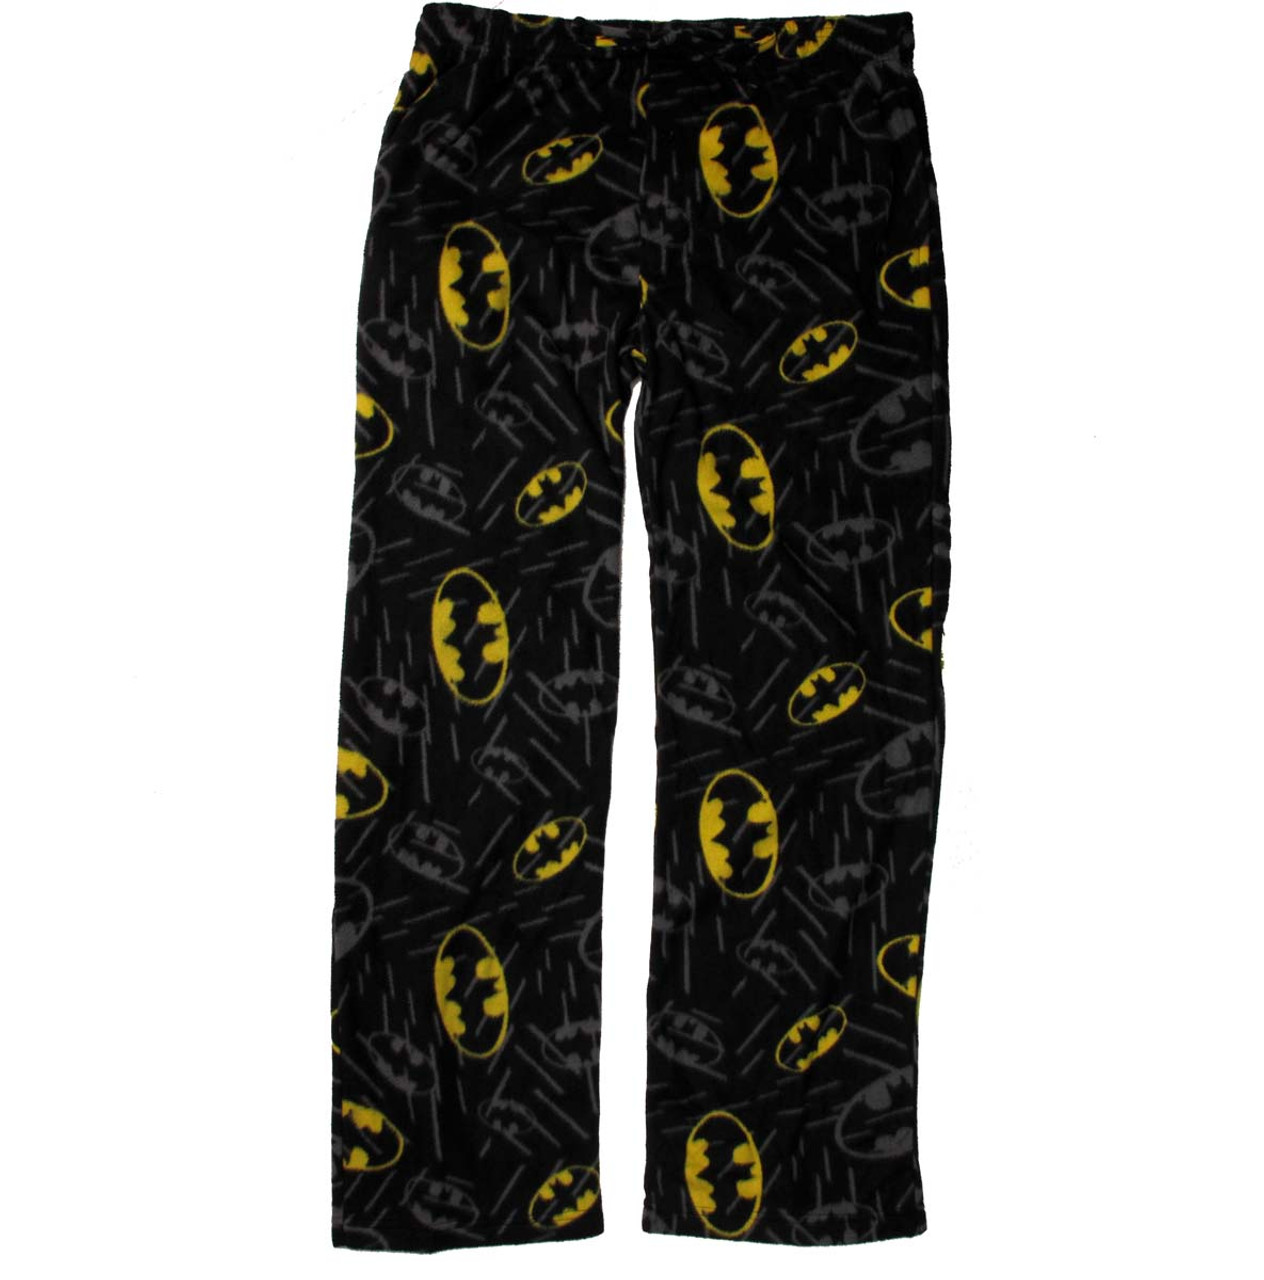 Batman pants